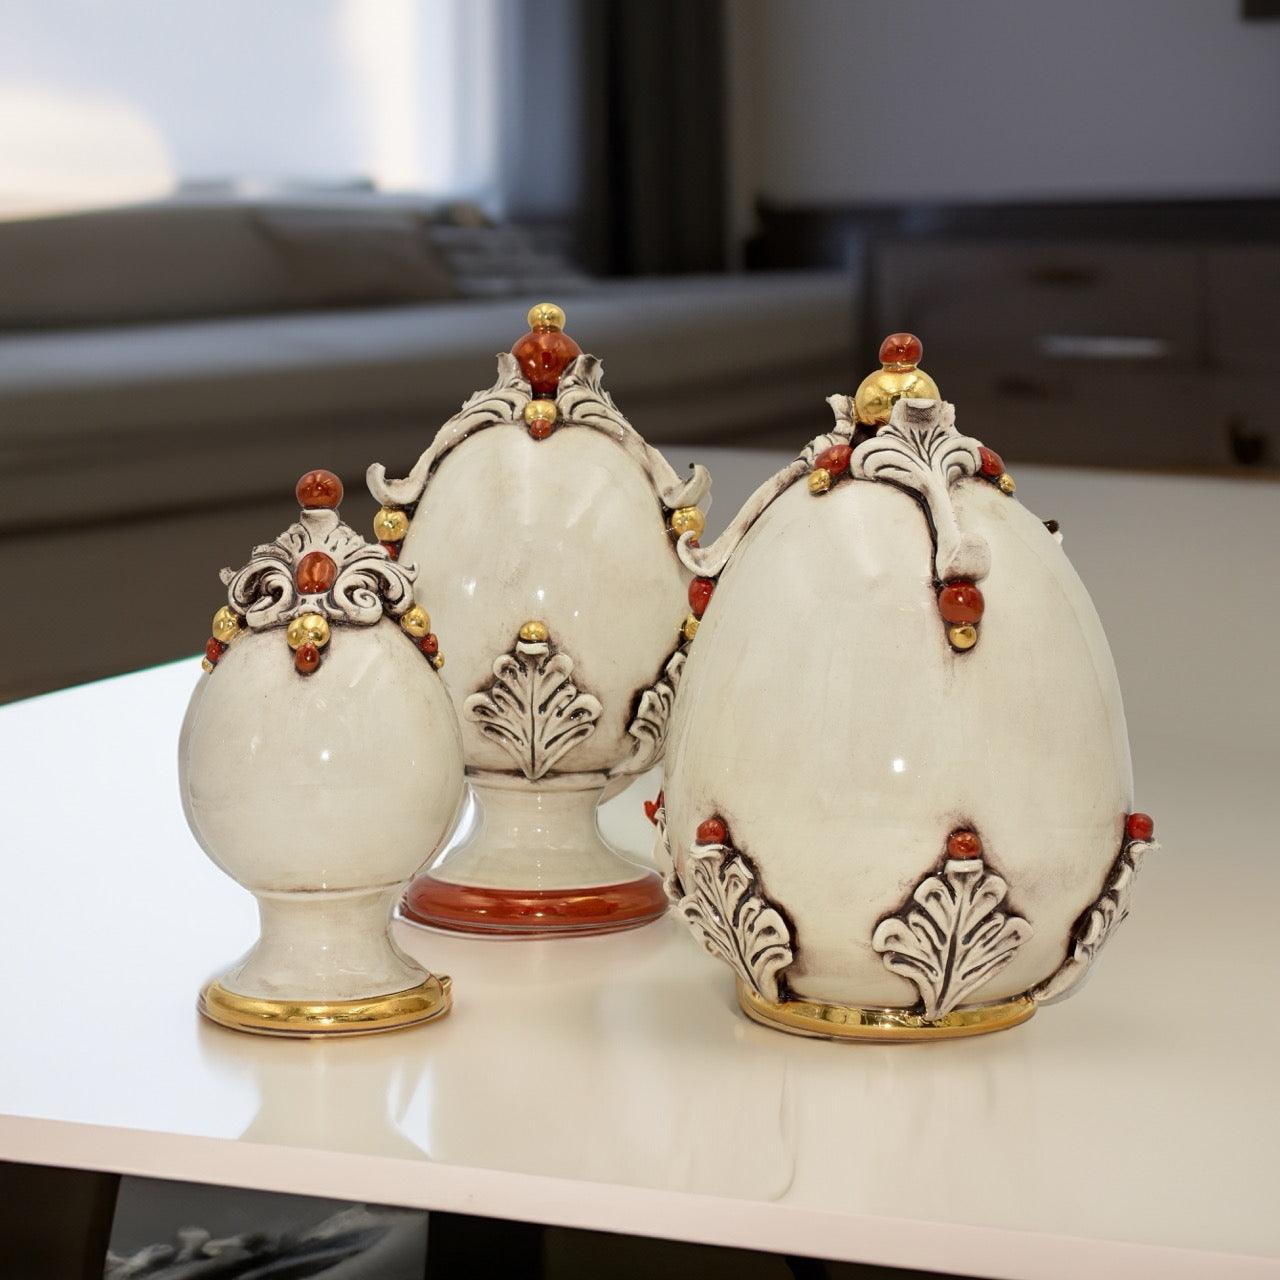 Uovo in ceramica h 18 Madreperla Oro e Lustri - Ceramiche di Caltagirone - Ceramiche di Caltagirone Sofia